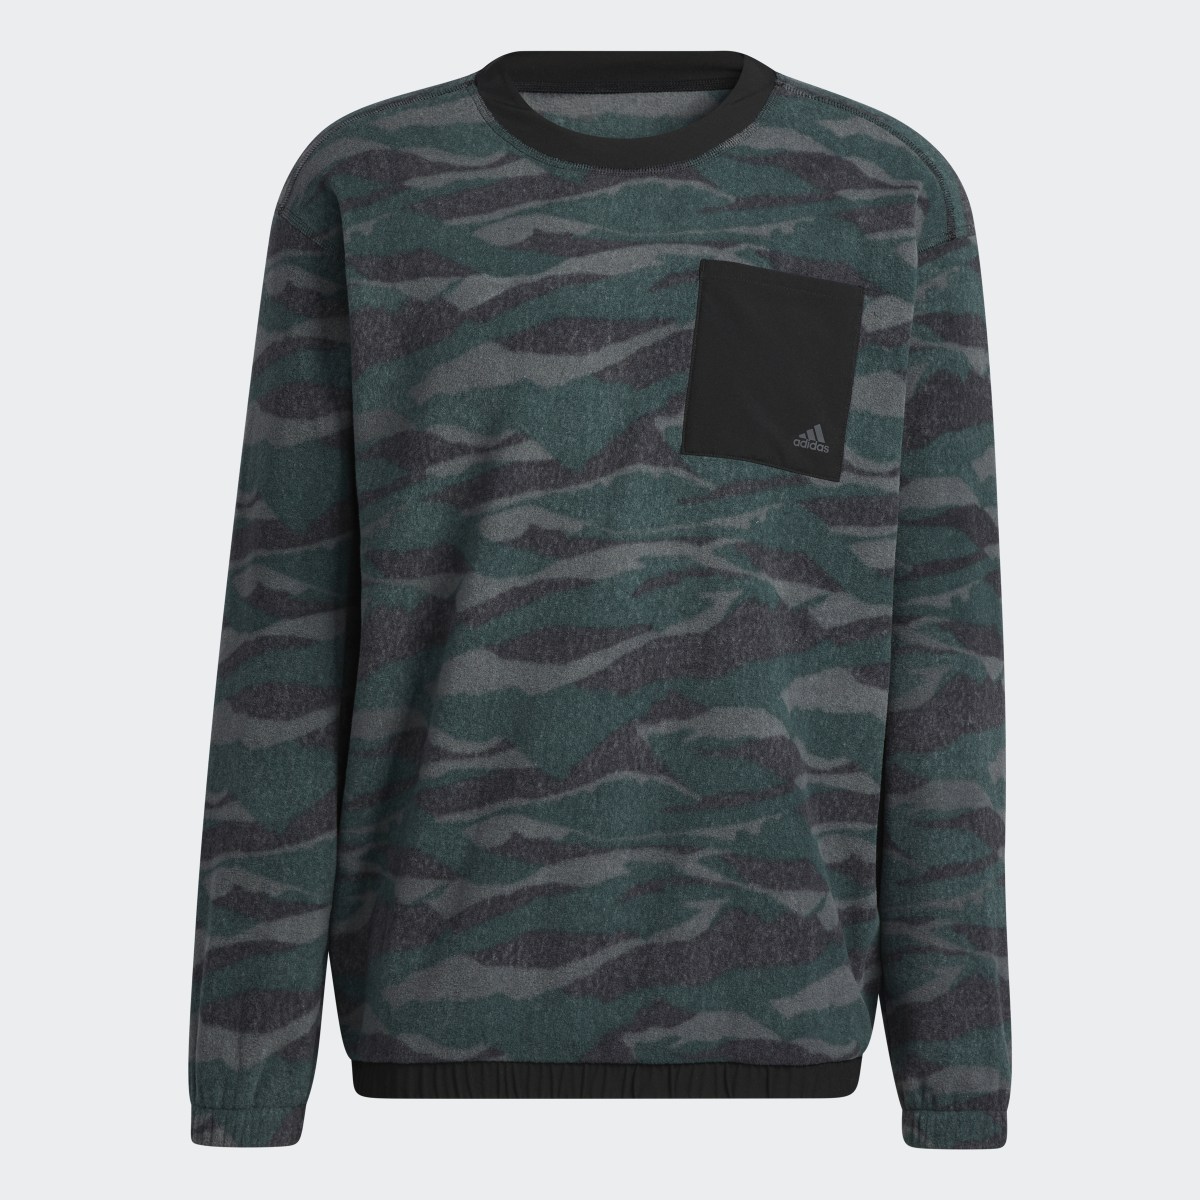 Adidas Texture-Print Sweatshirt. 5